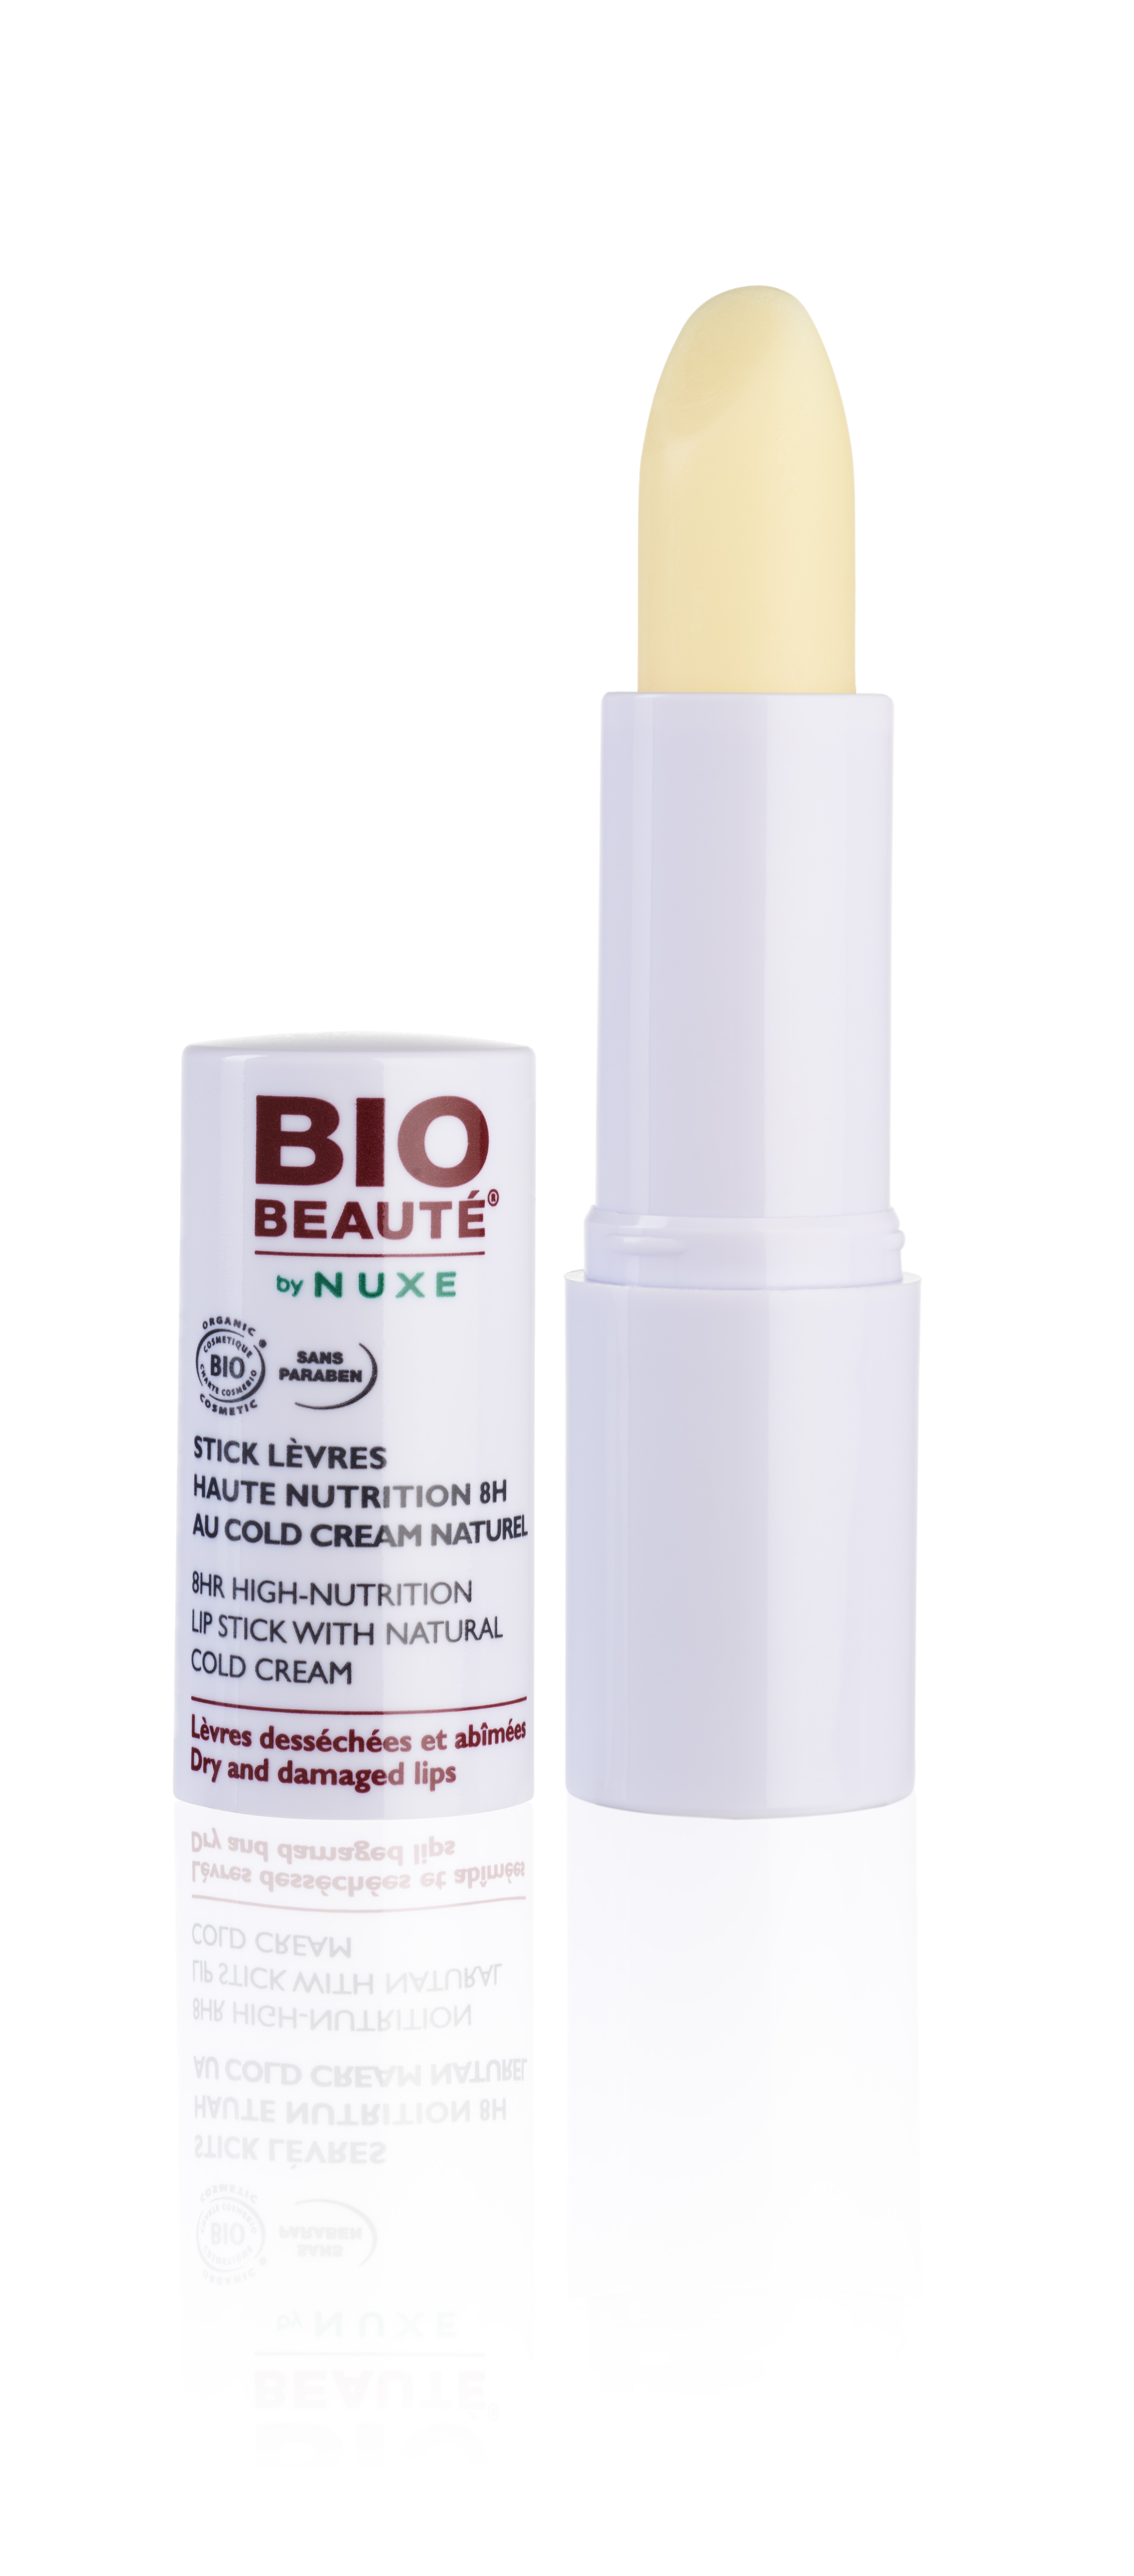 Bio Beauté by NUXE BB 8Hr High-Nutrition Lipstick